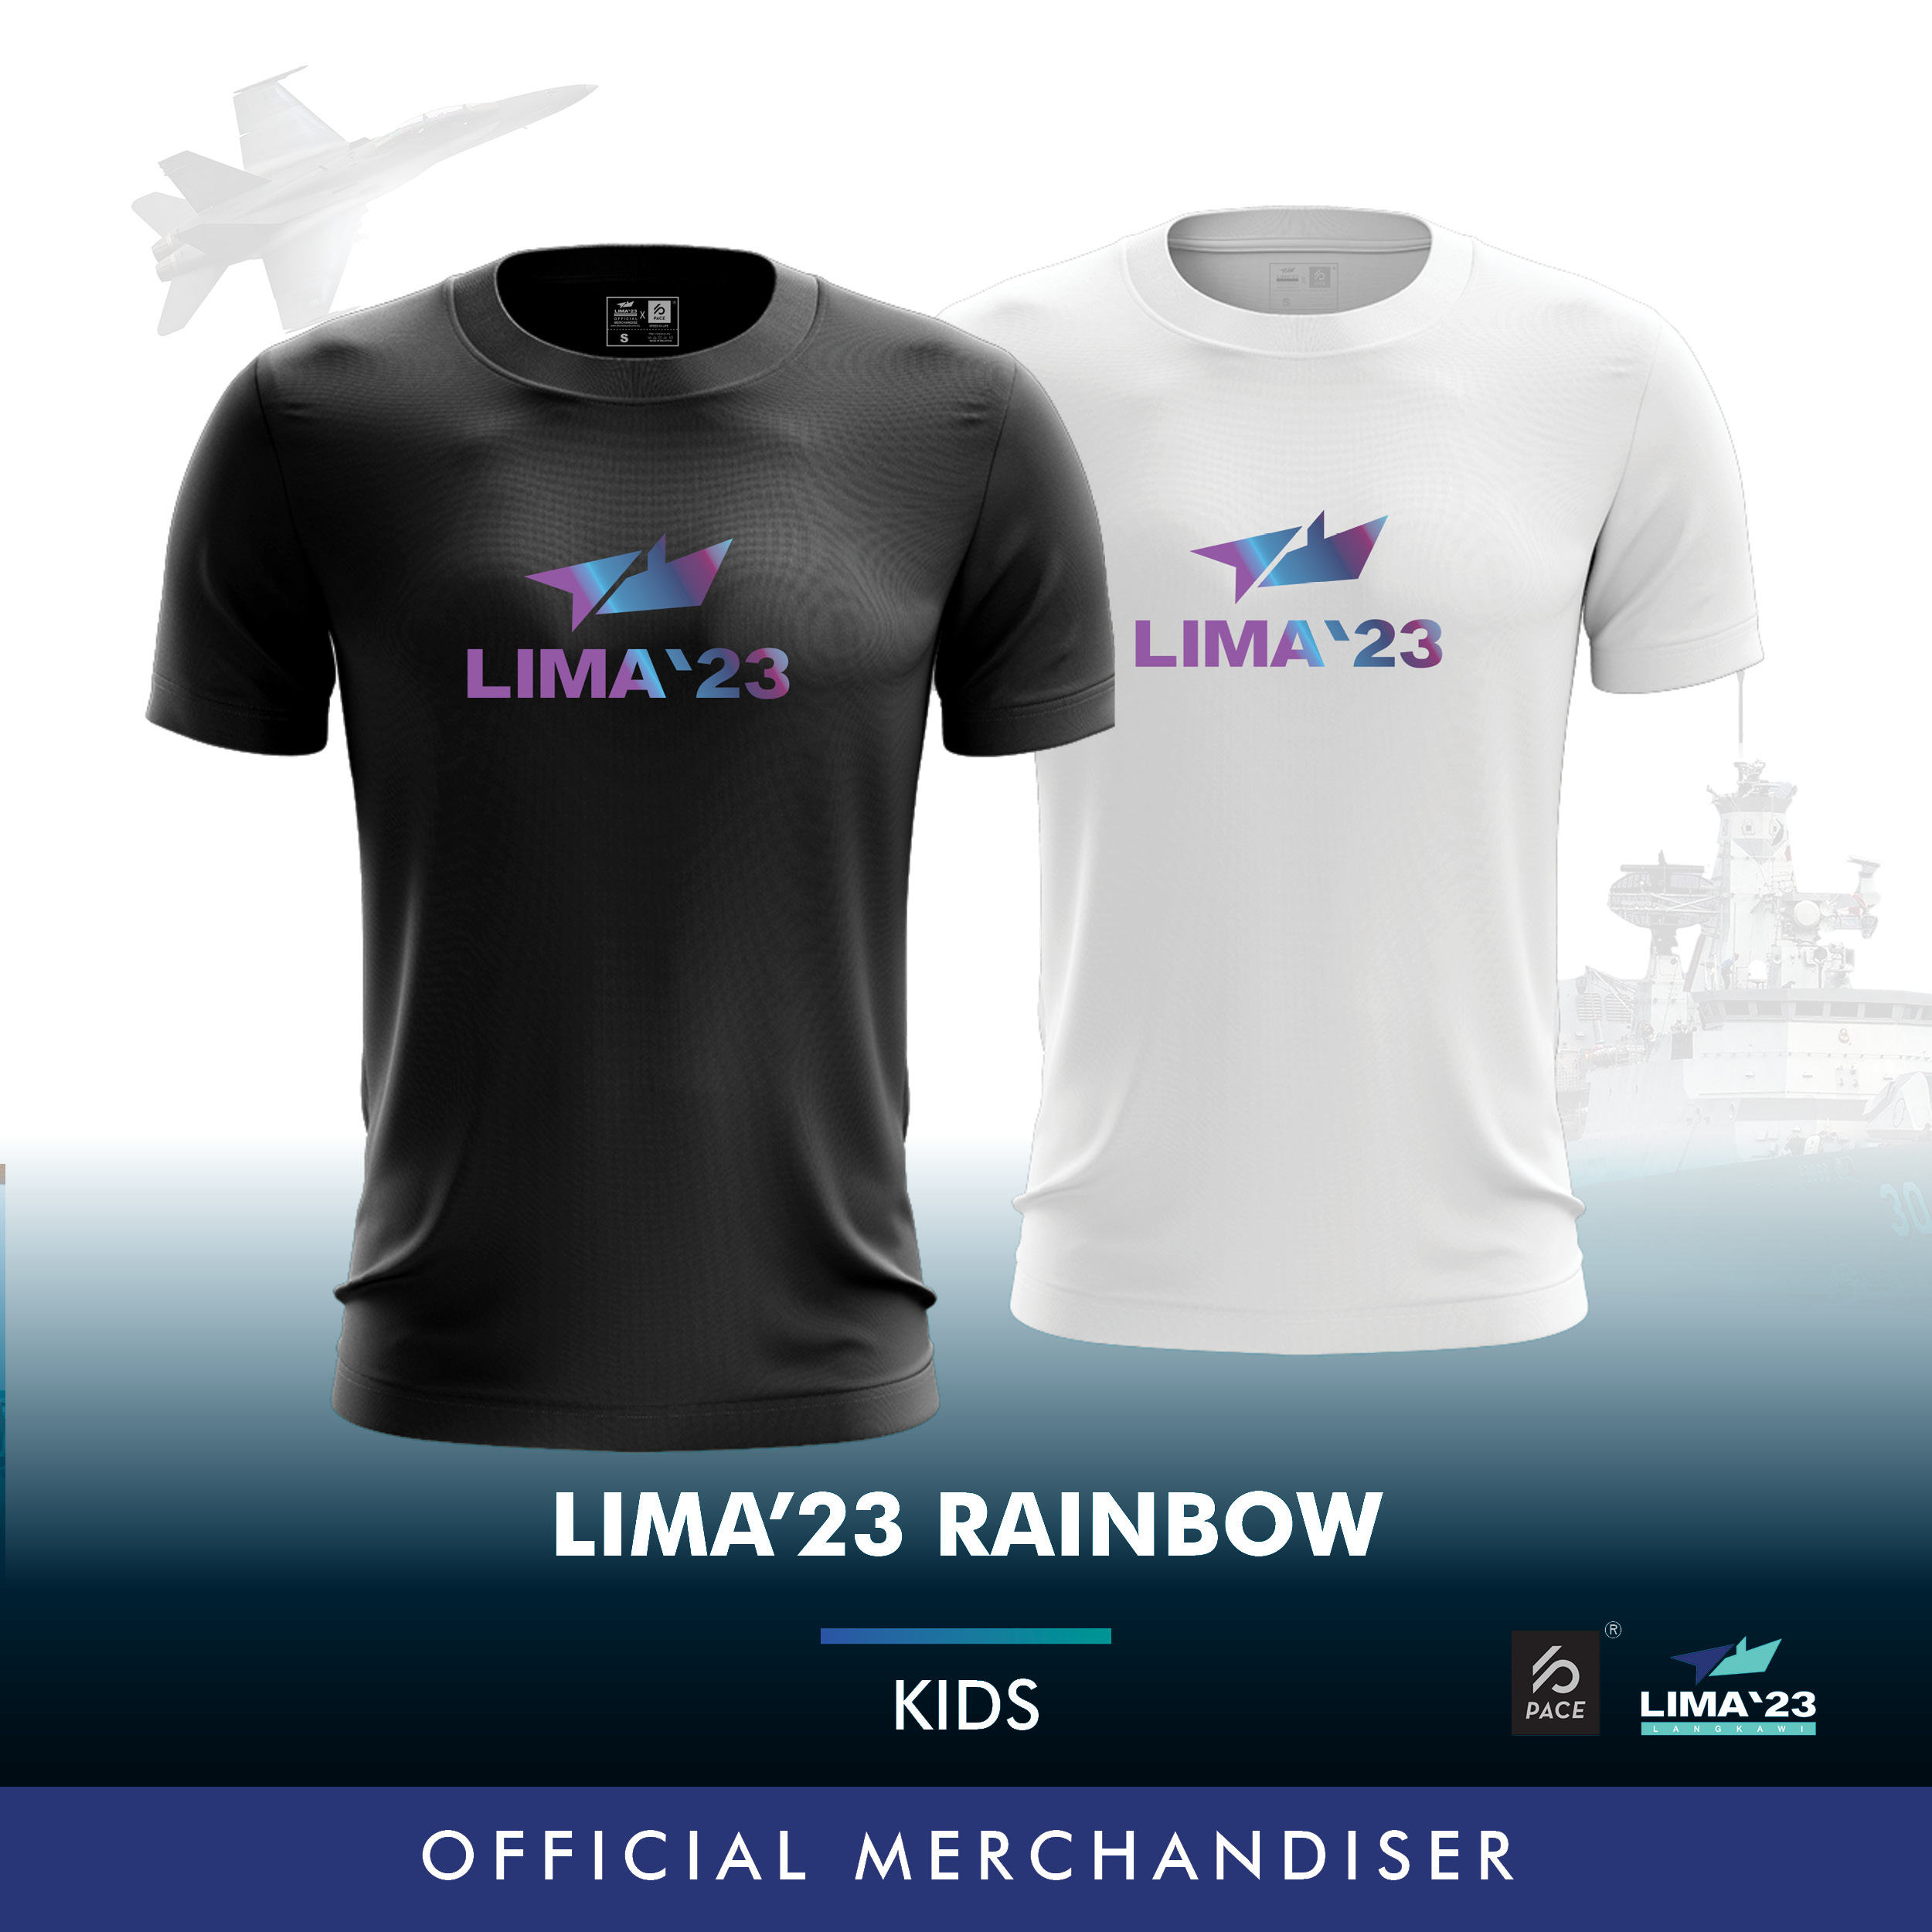 LIMA'23 Kids Rainbow Reflective Tee Shirt Black & White